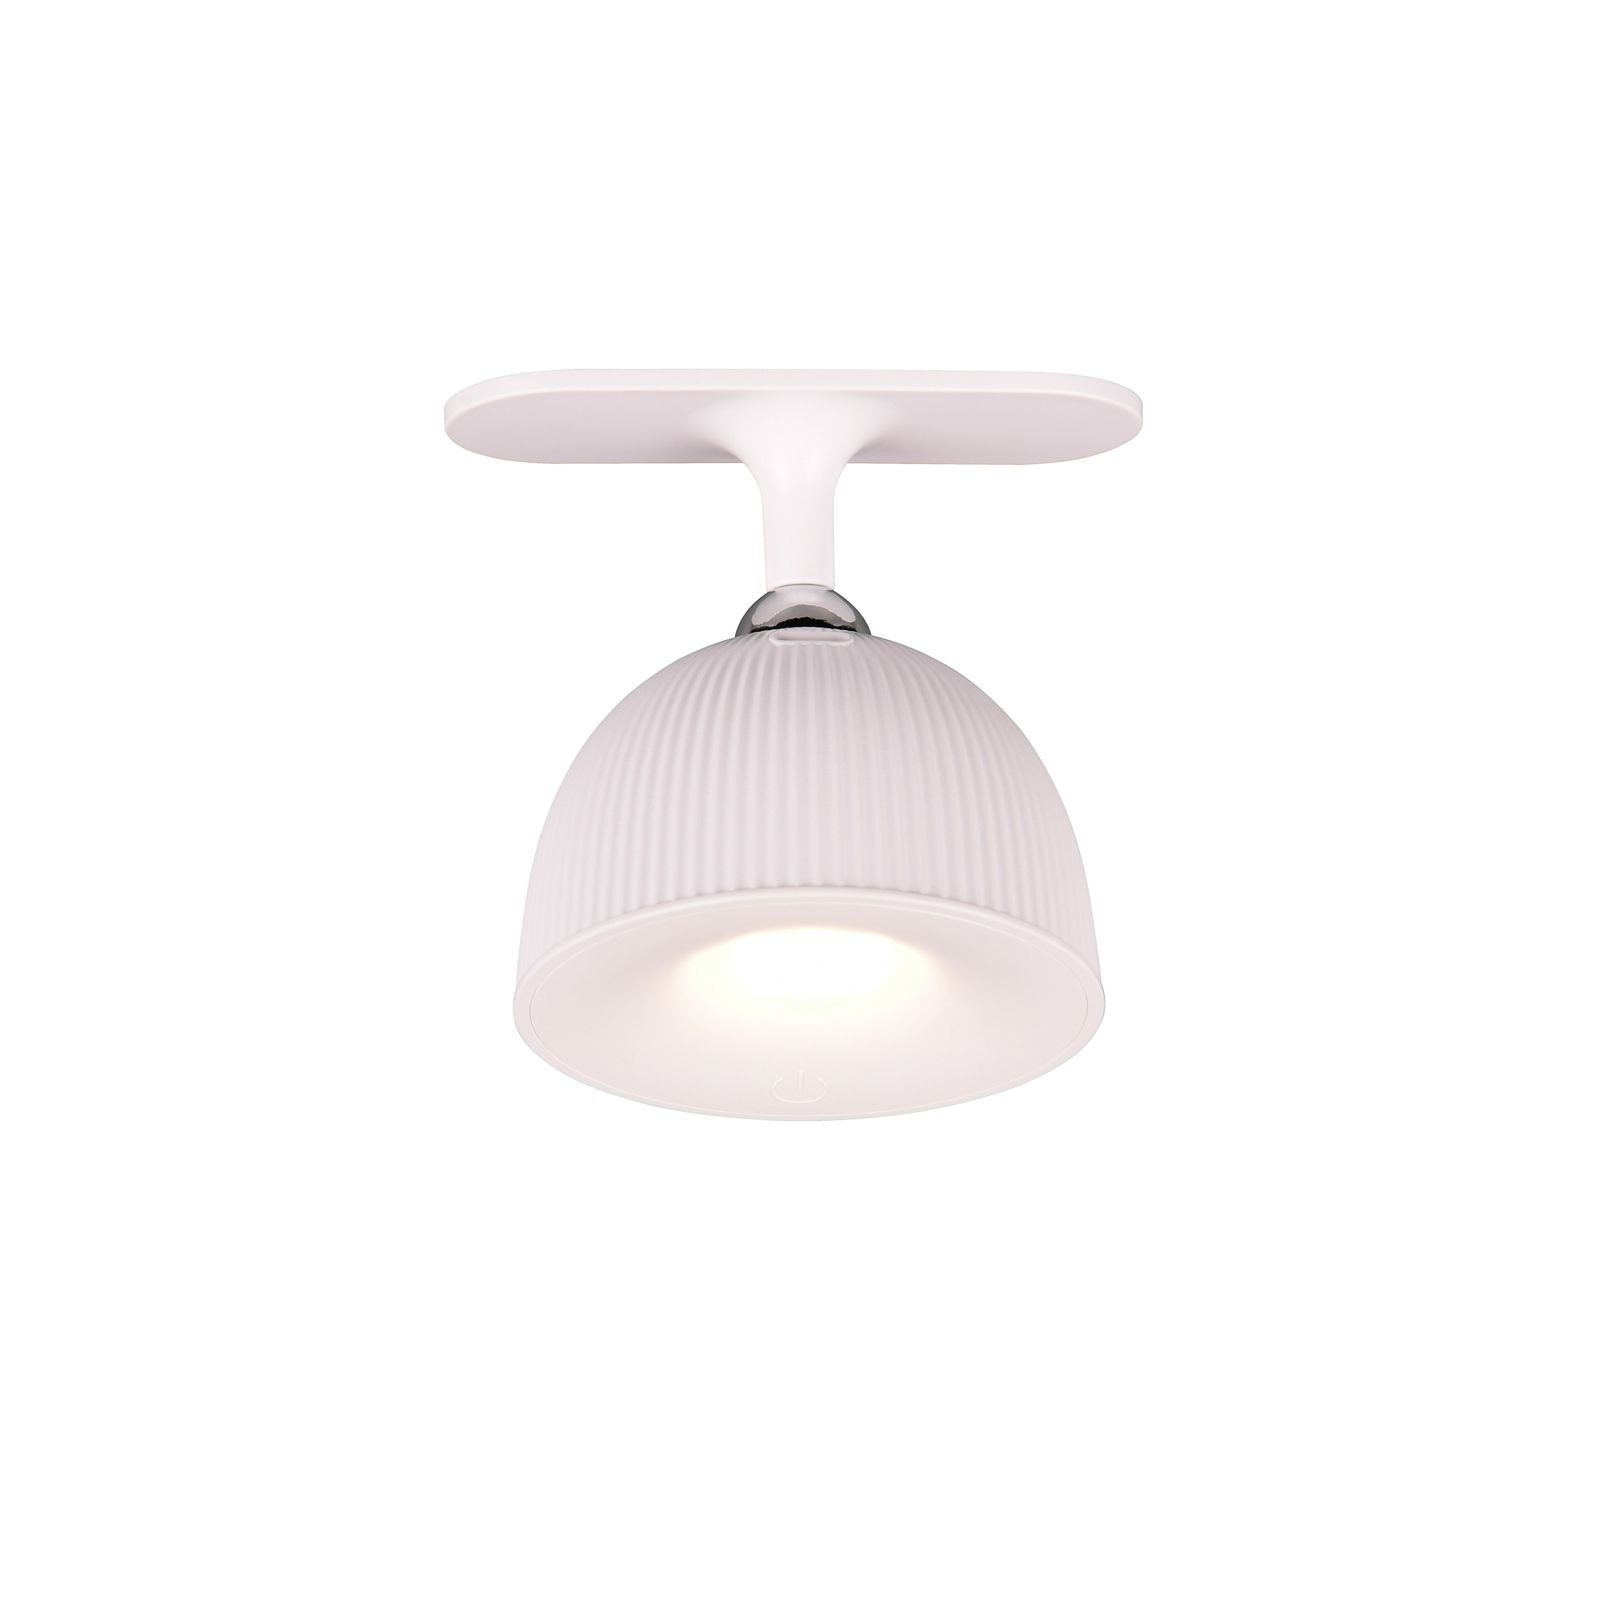 Maxima LED table lamp, white, height 41 cm, plastic